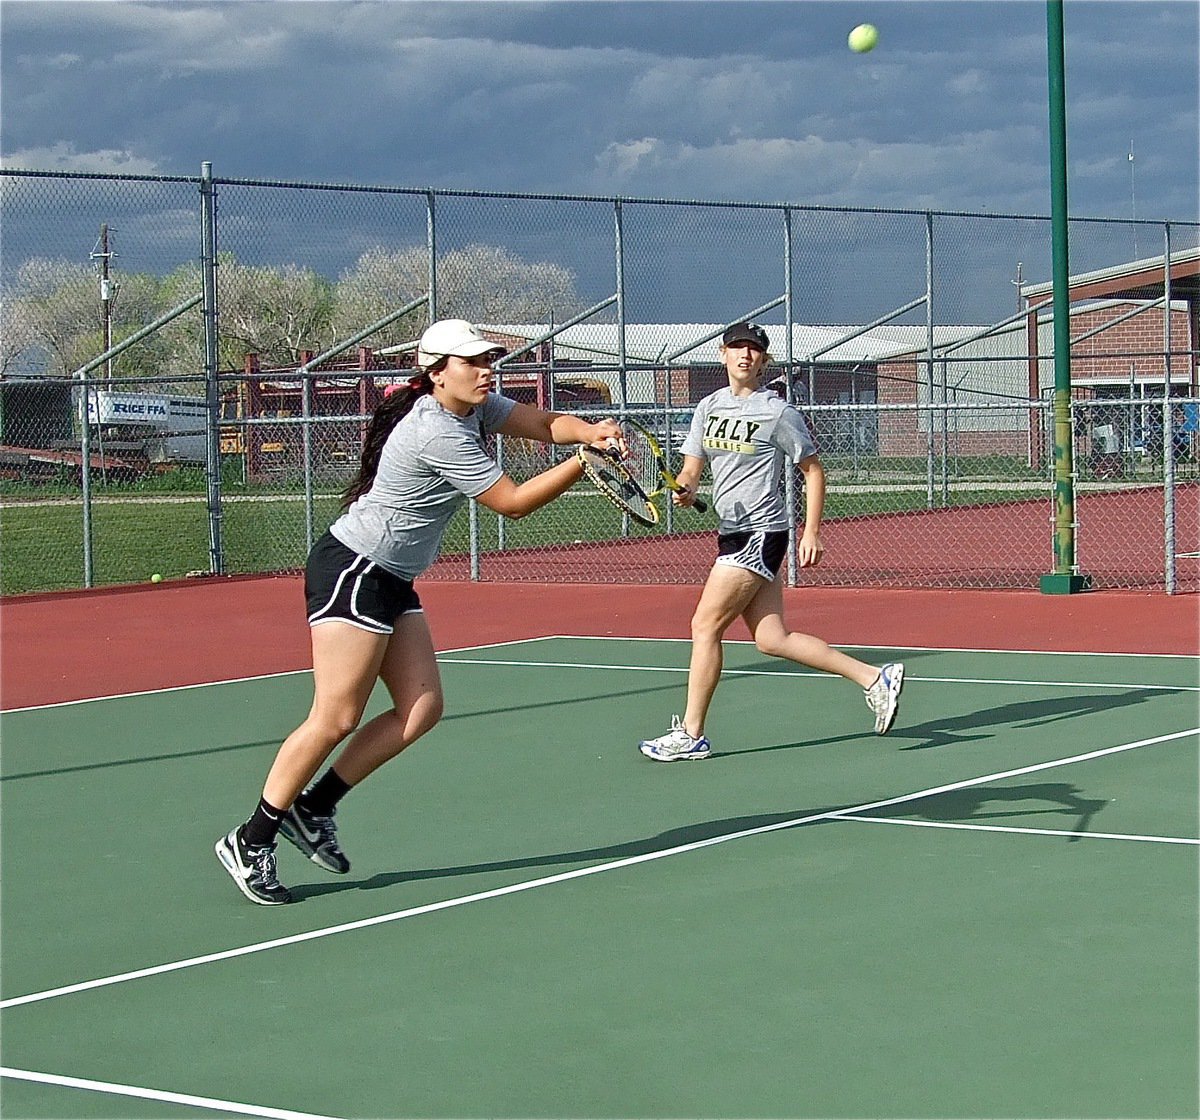 Image: Alyssa Richards returns the ball while Megan Richards backs her little sister up.